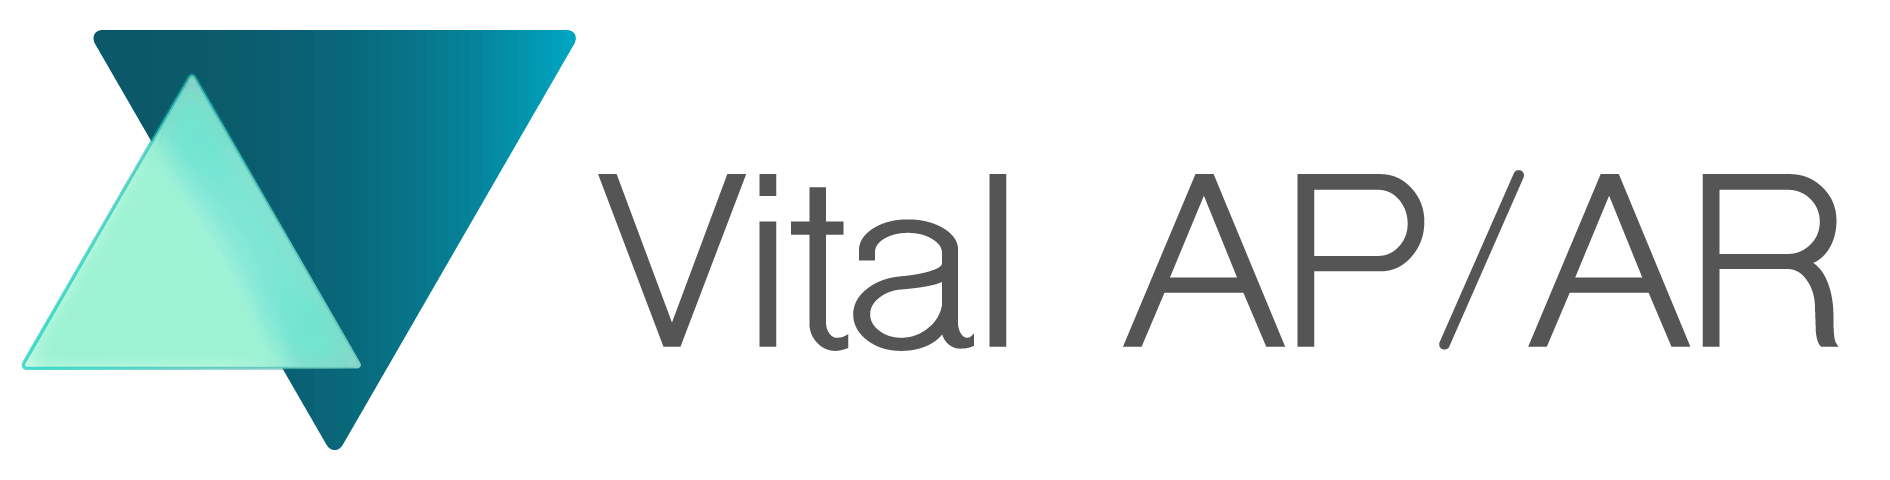 Vital AP/AR